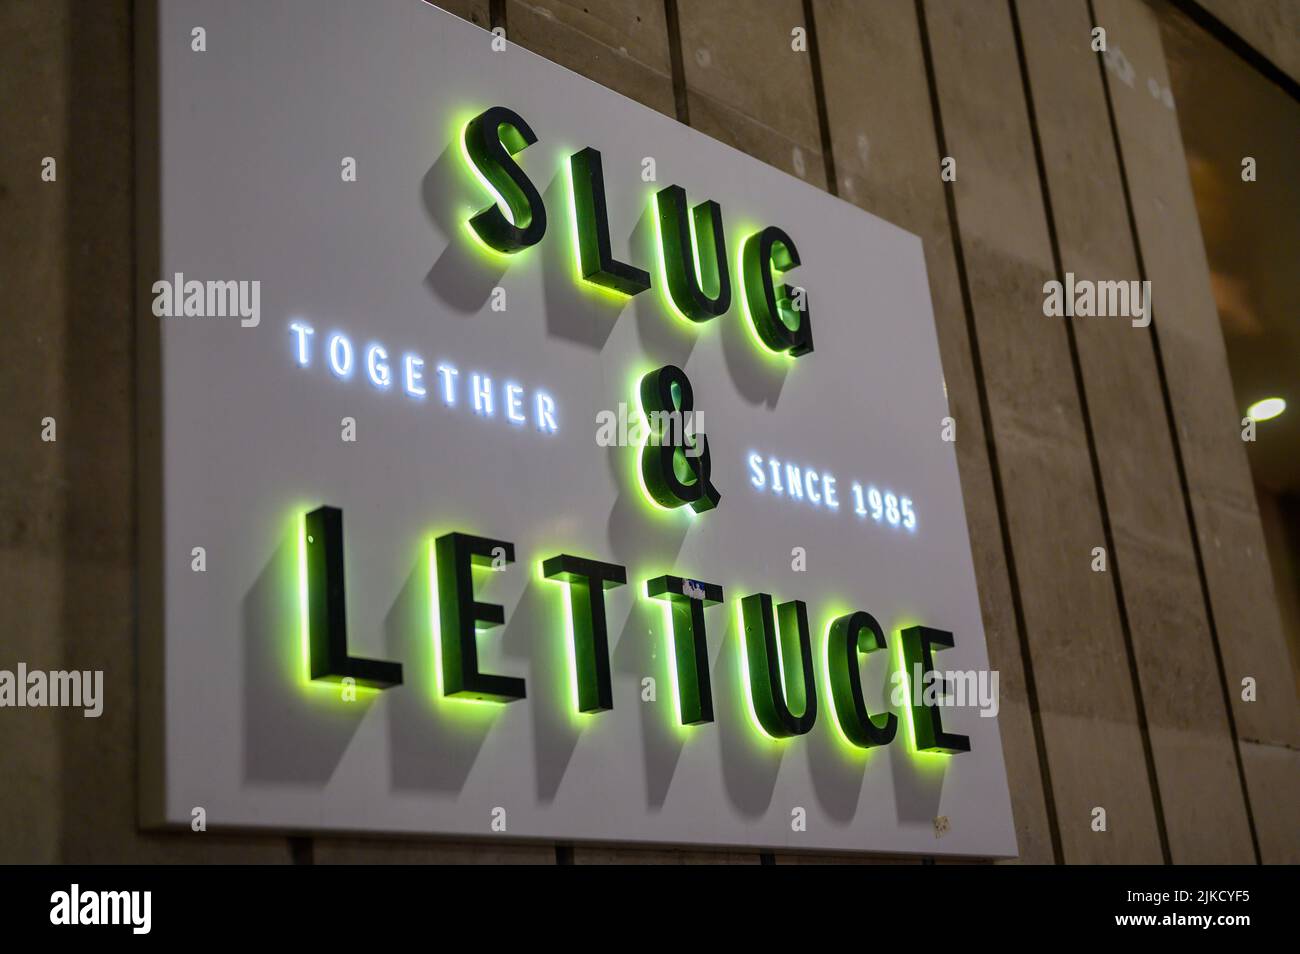 LONDON - May 17, 2022: Illuminated sign for Slug and Lettuce pub at night Stock Photo